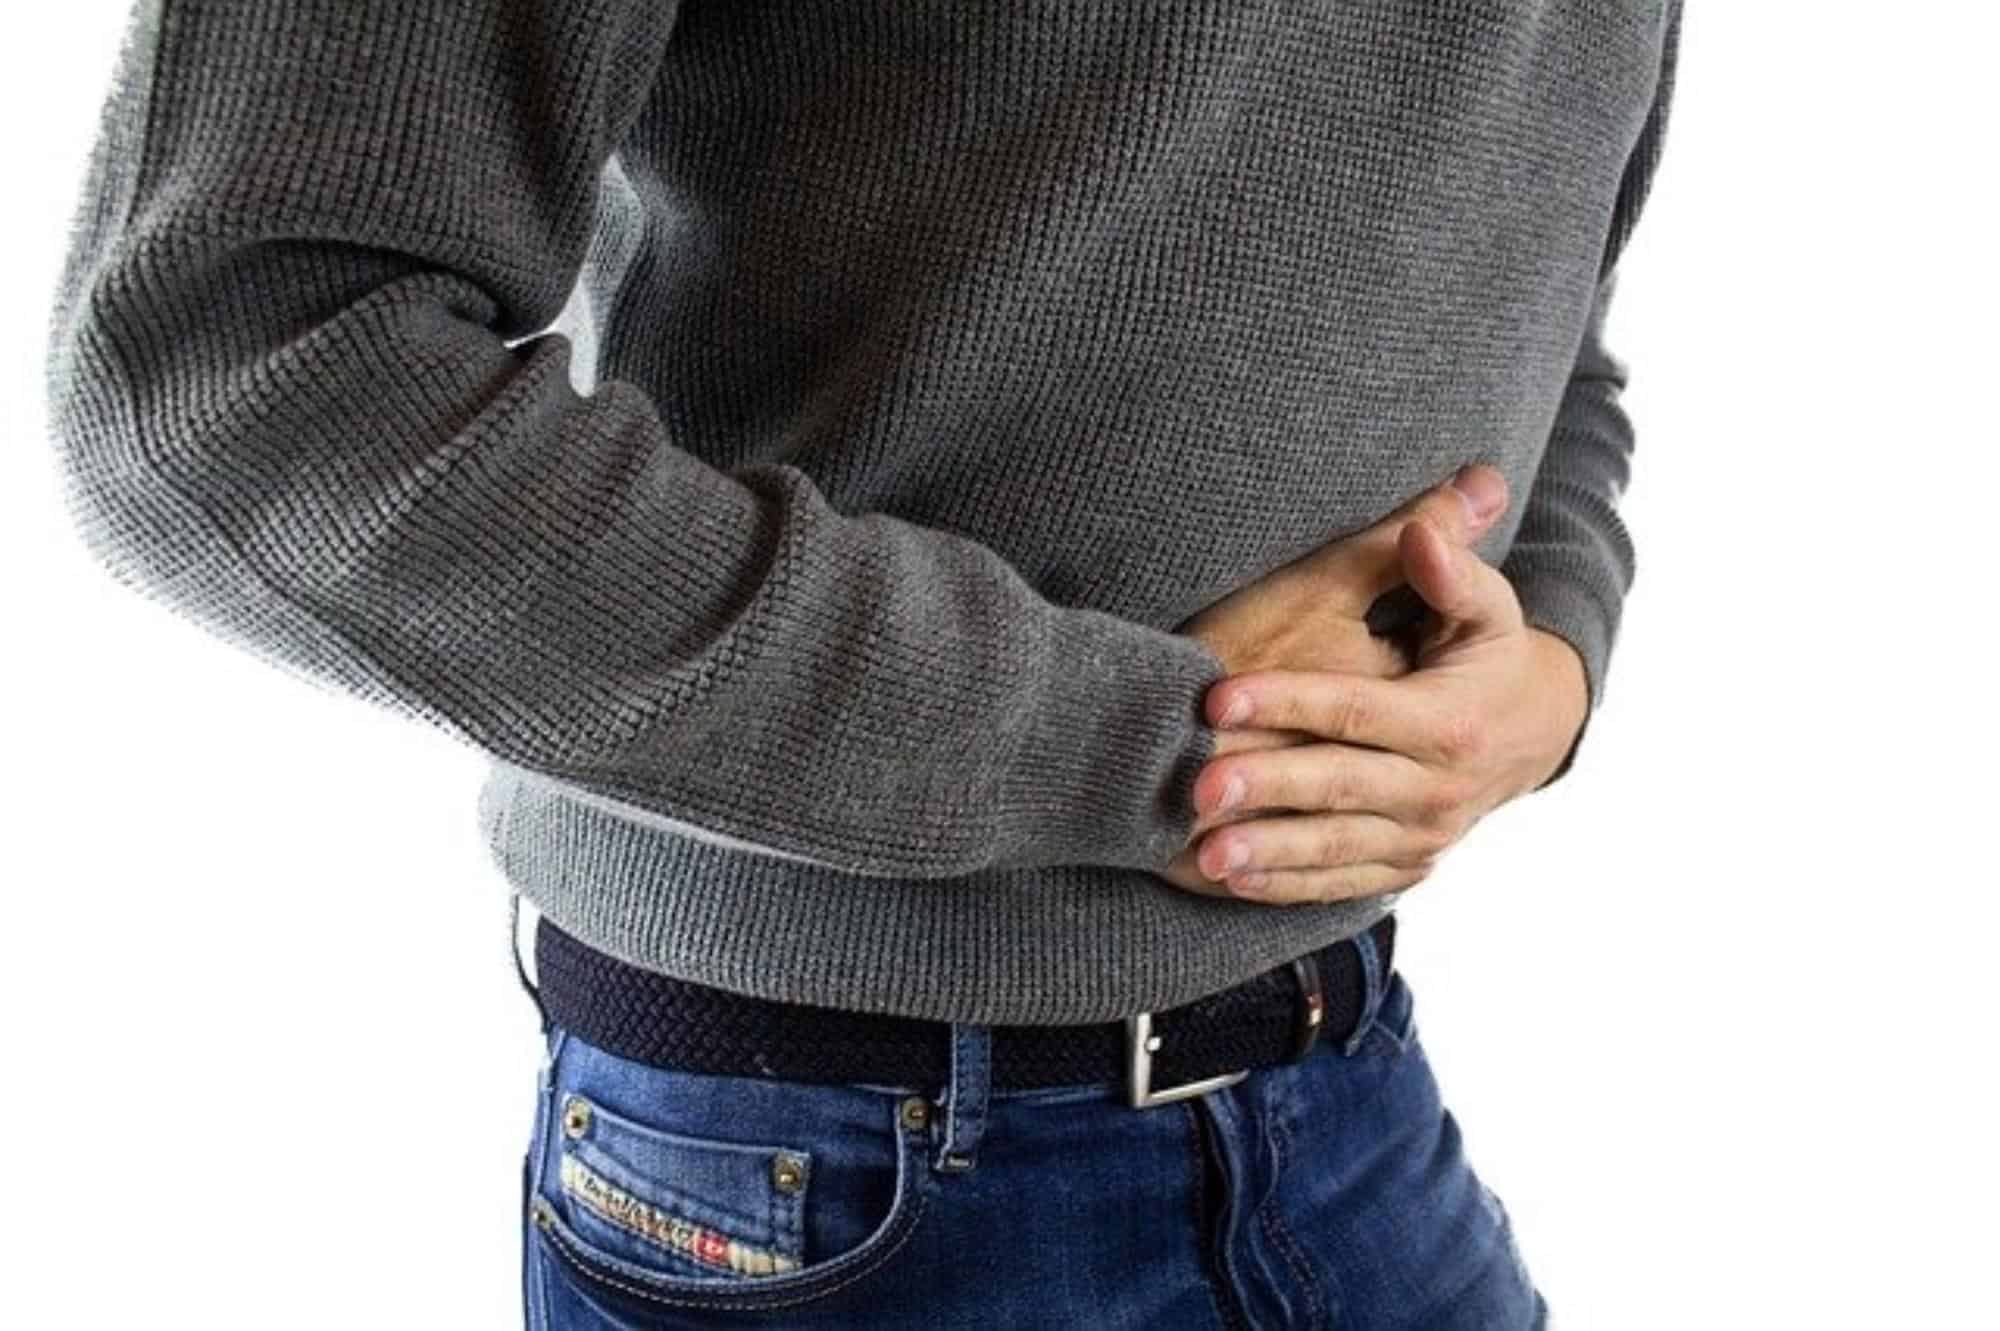 Crohn's disease causes abdominal pain